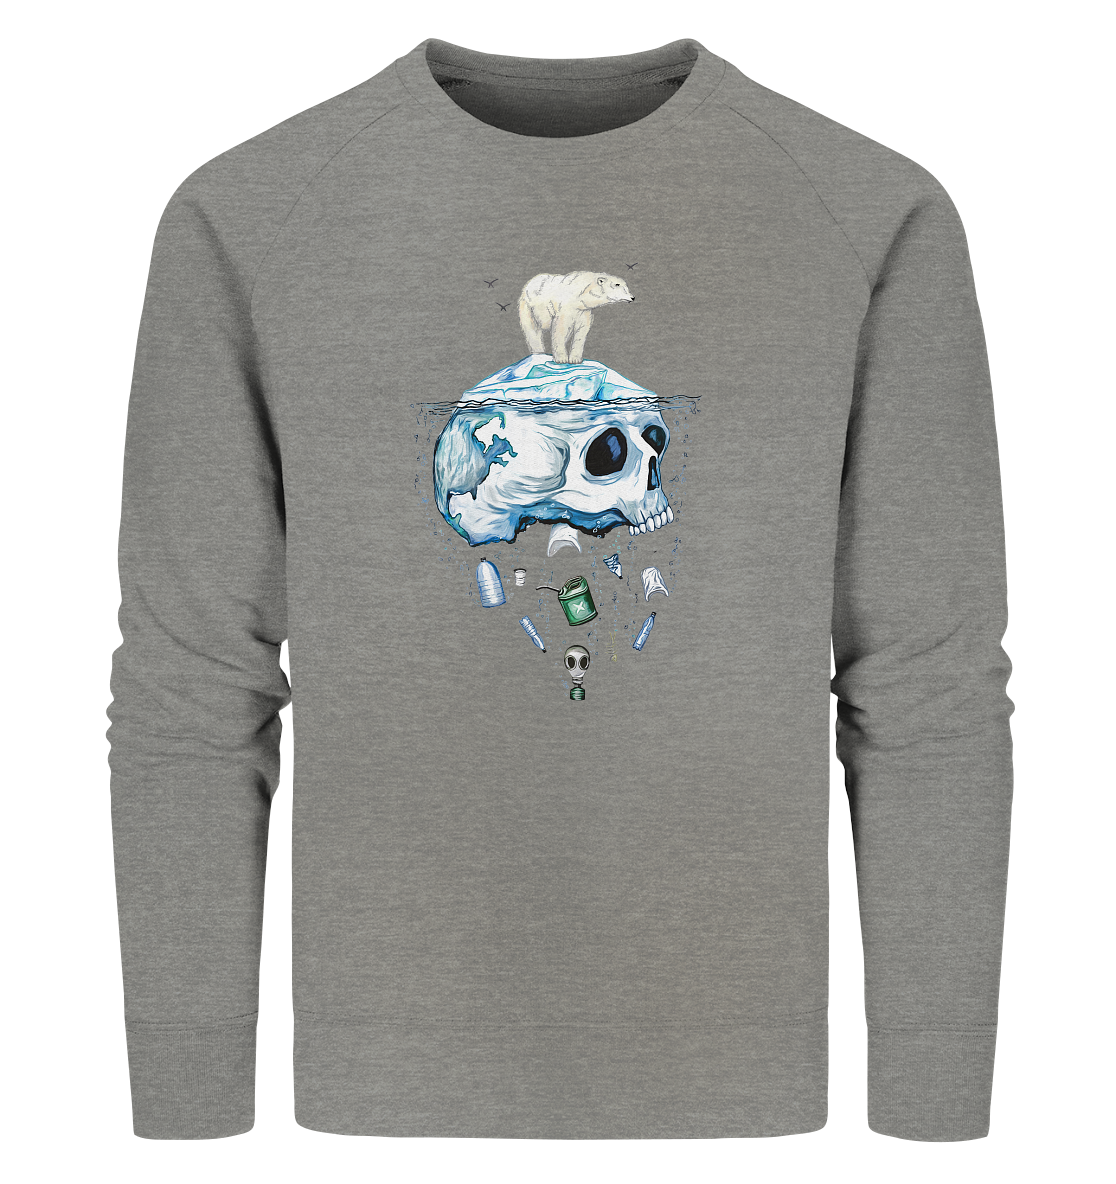 front-organic-sweatshirt-818381-1116x.png